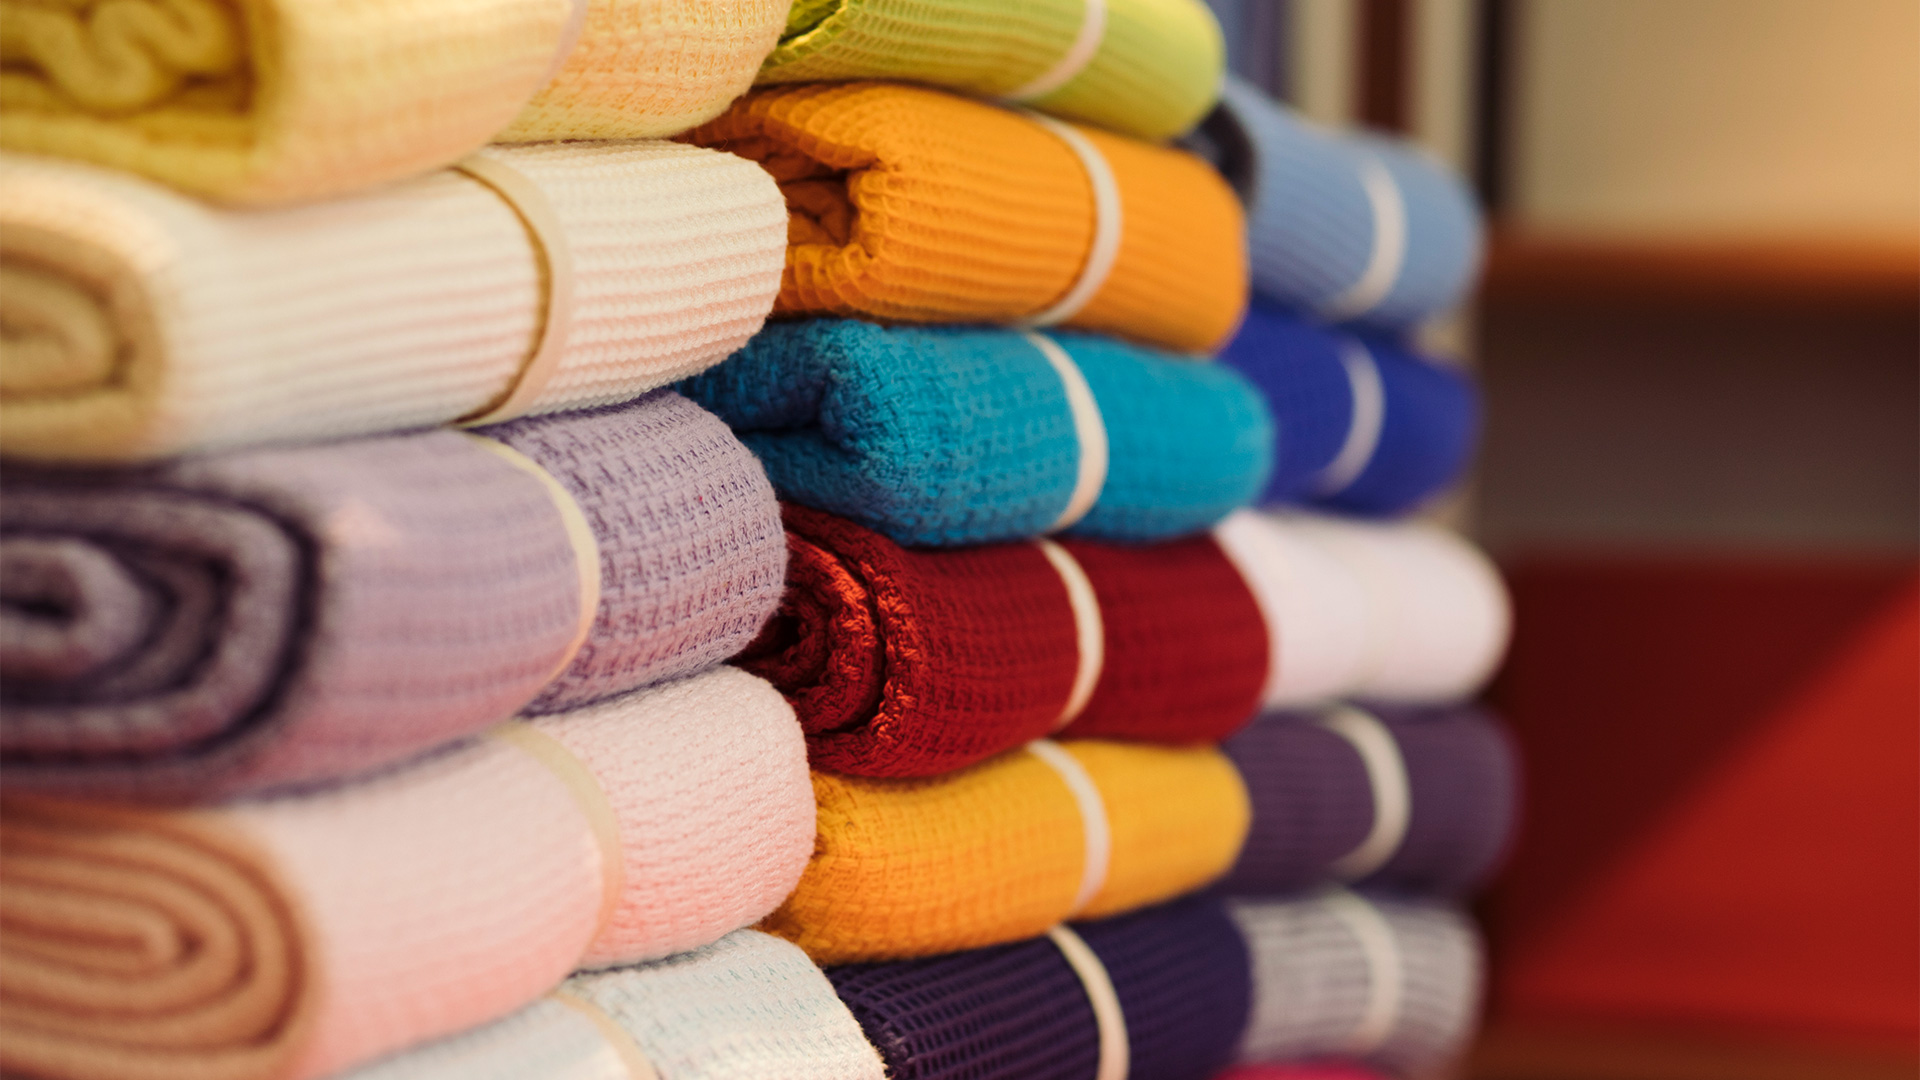 Kımıl Tekstil, production, garment